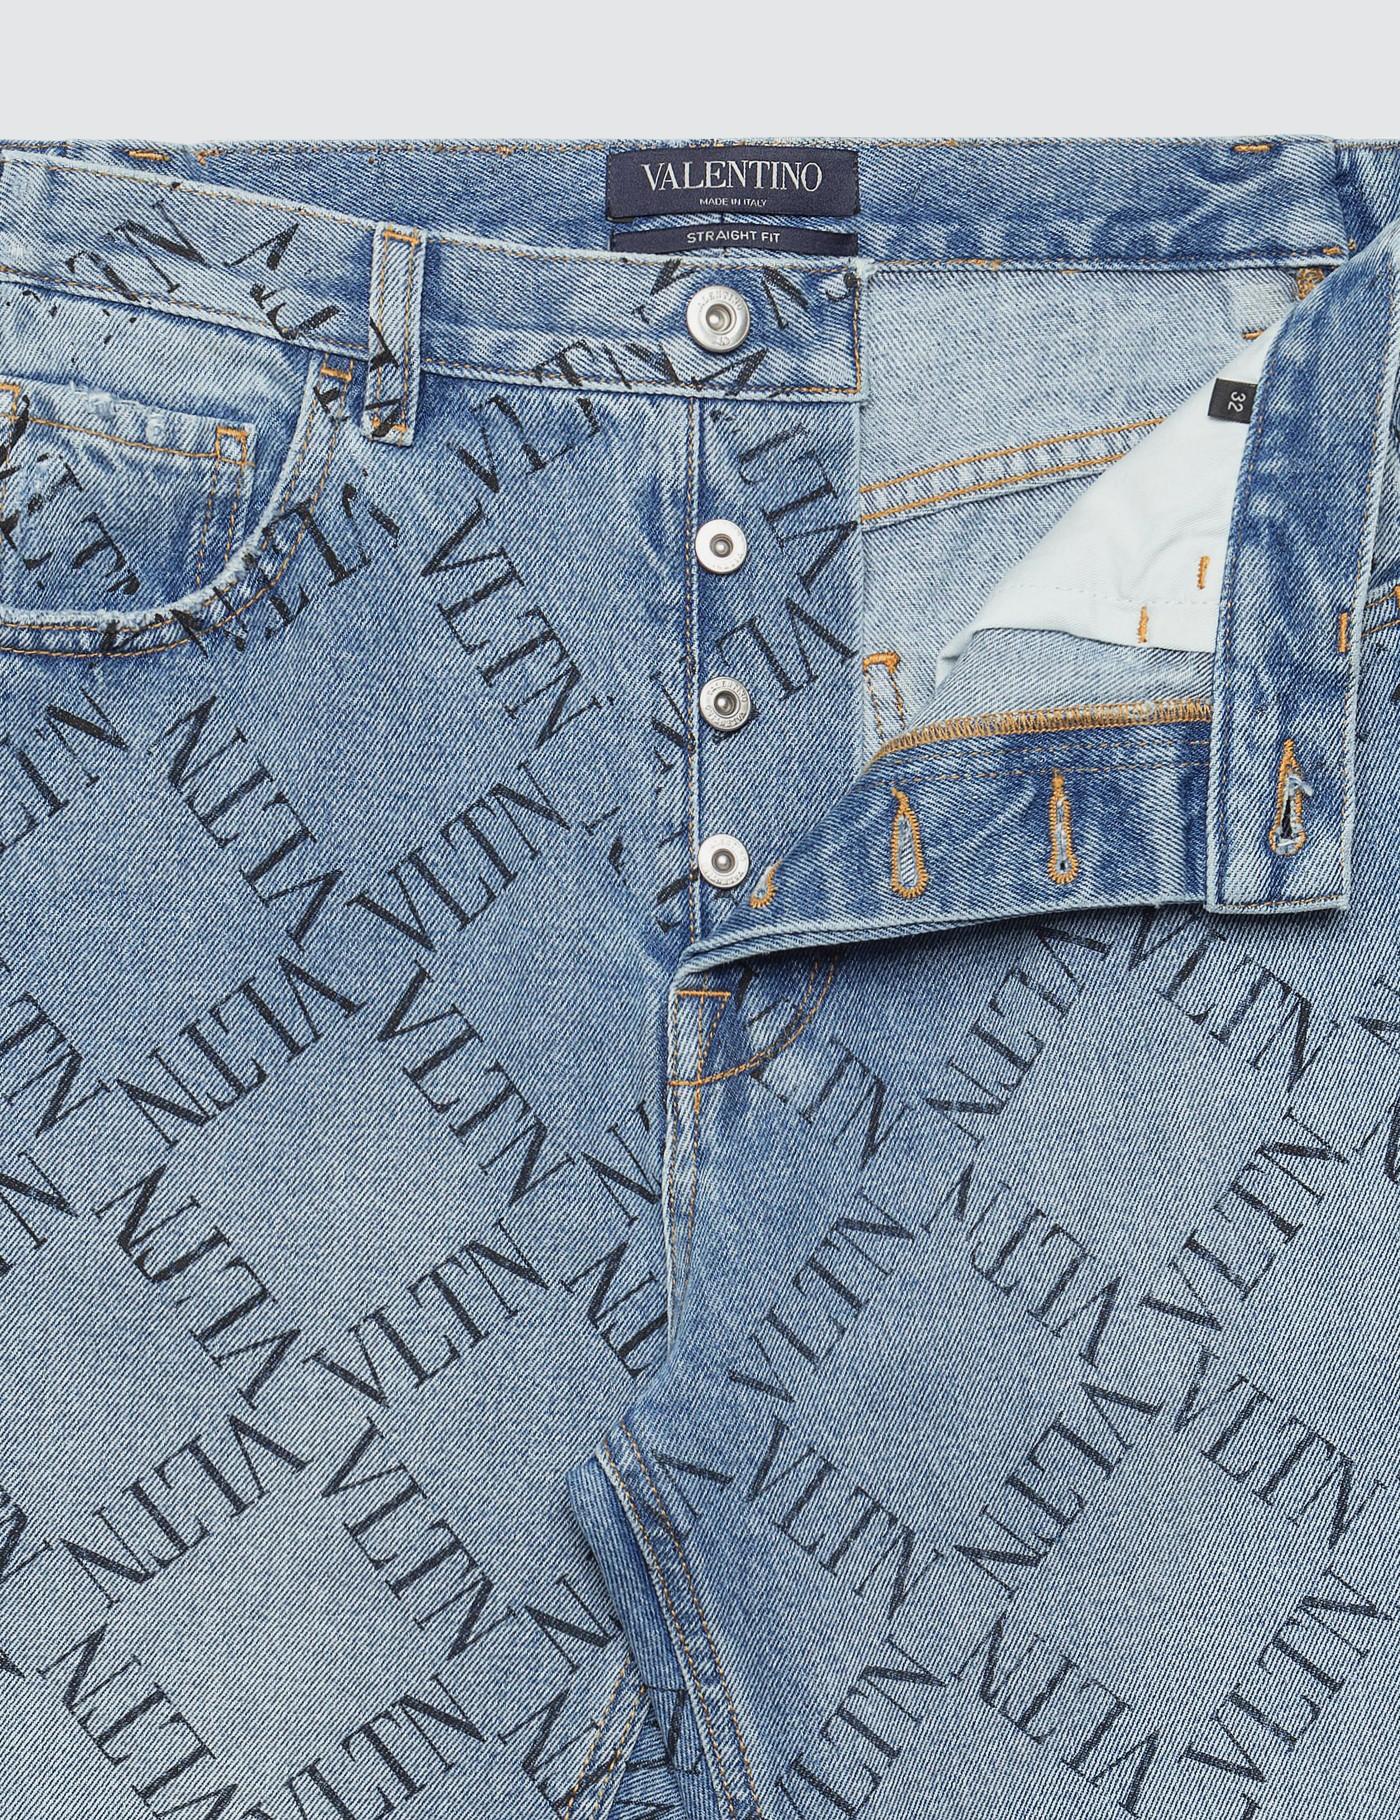 Valentino Monogram Jeans in Blue for Men - Lyst